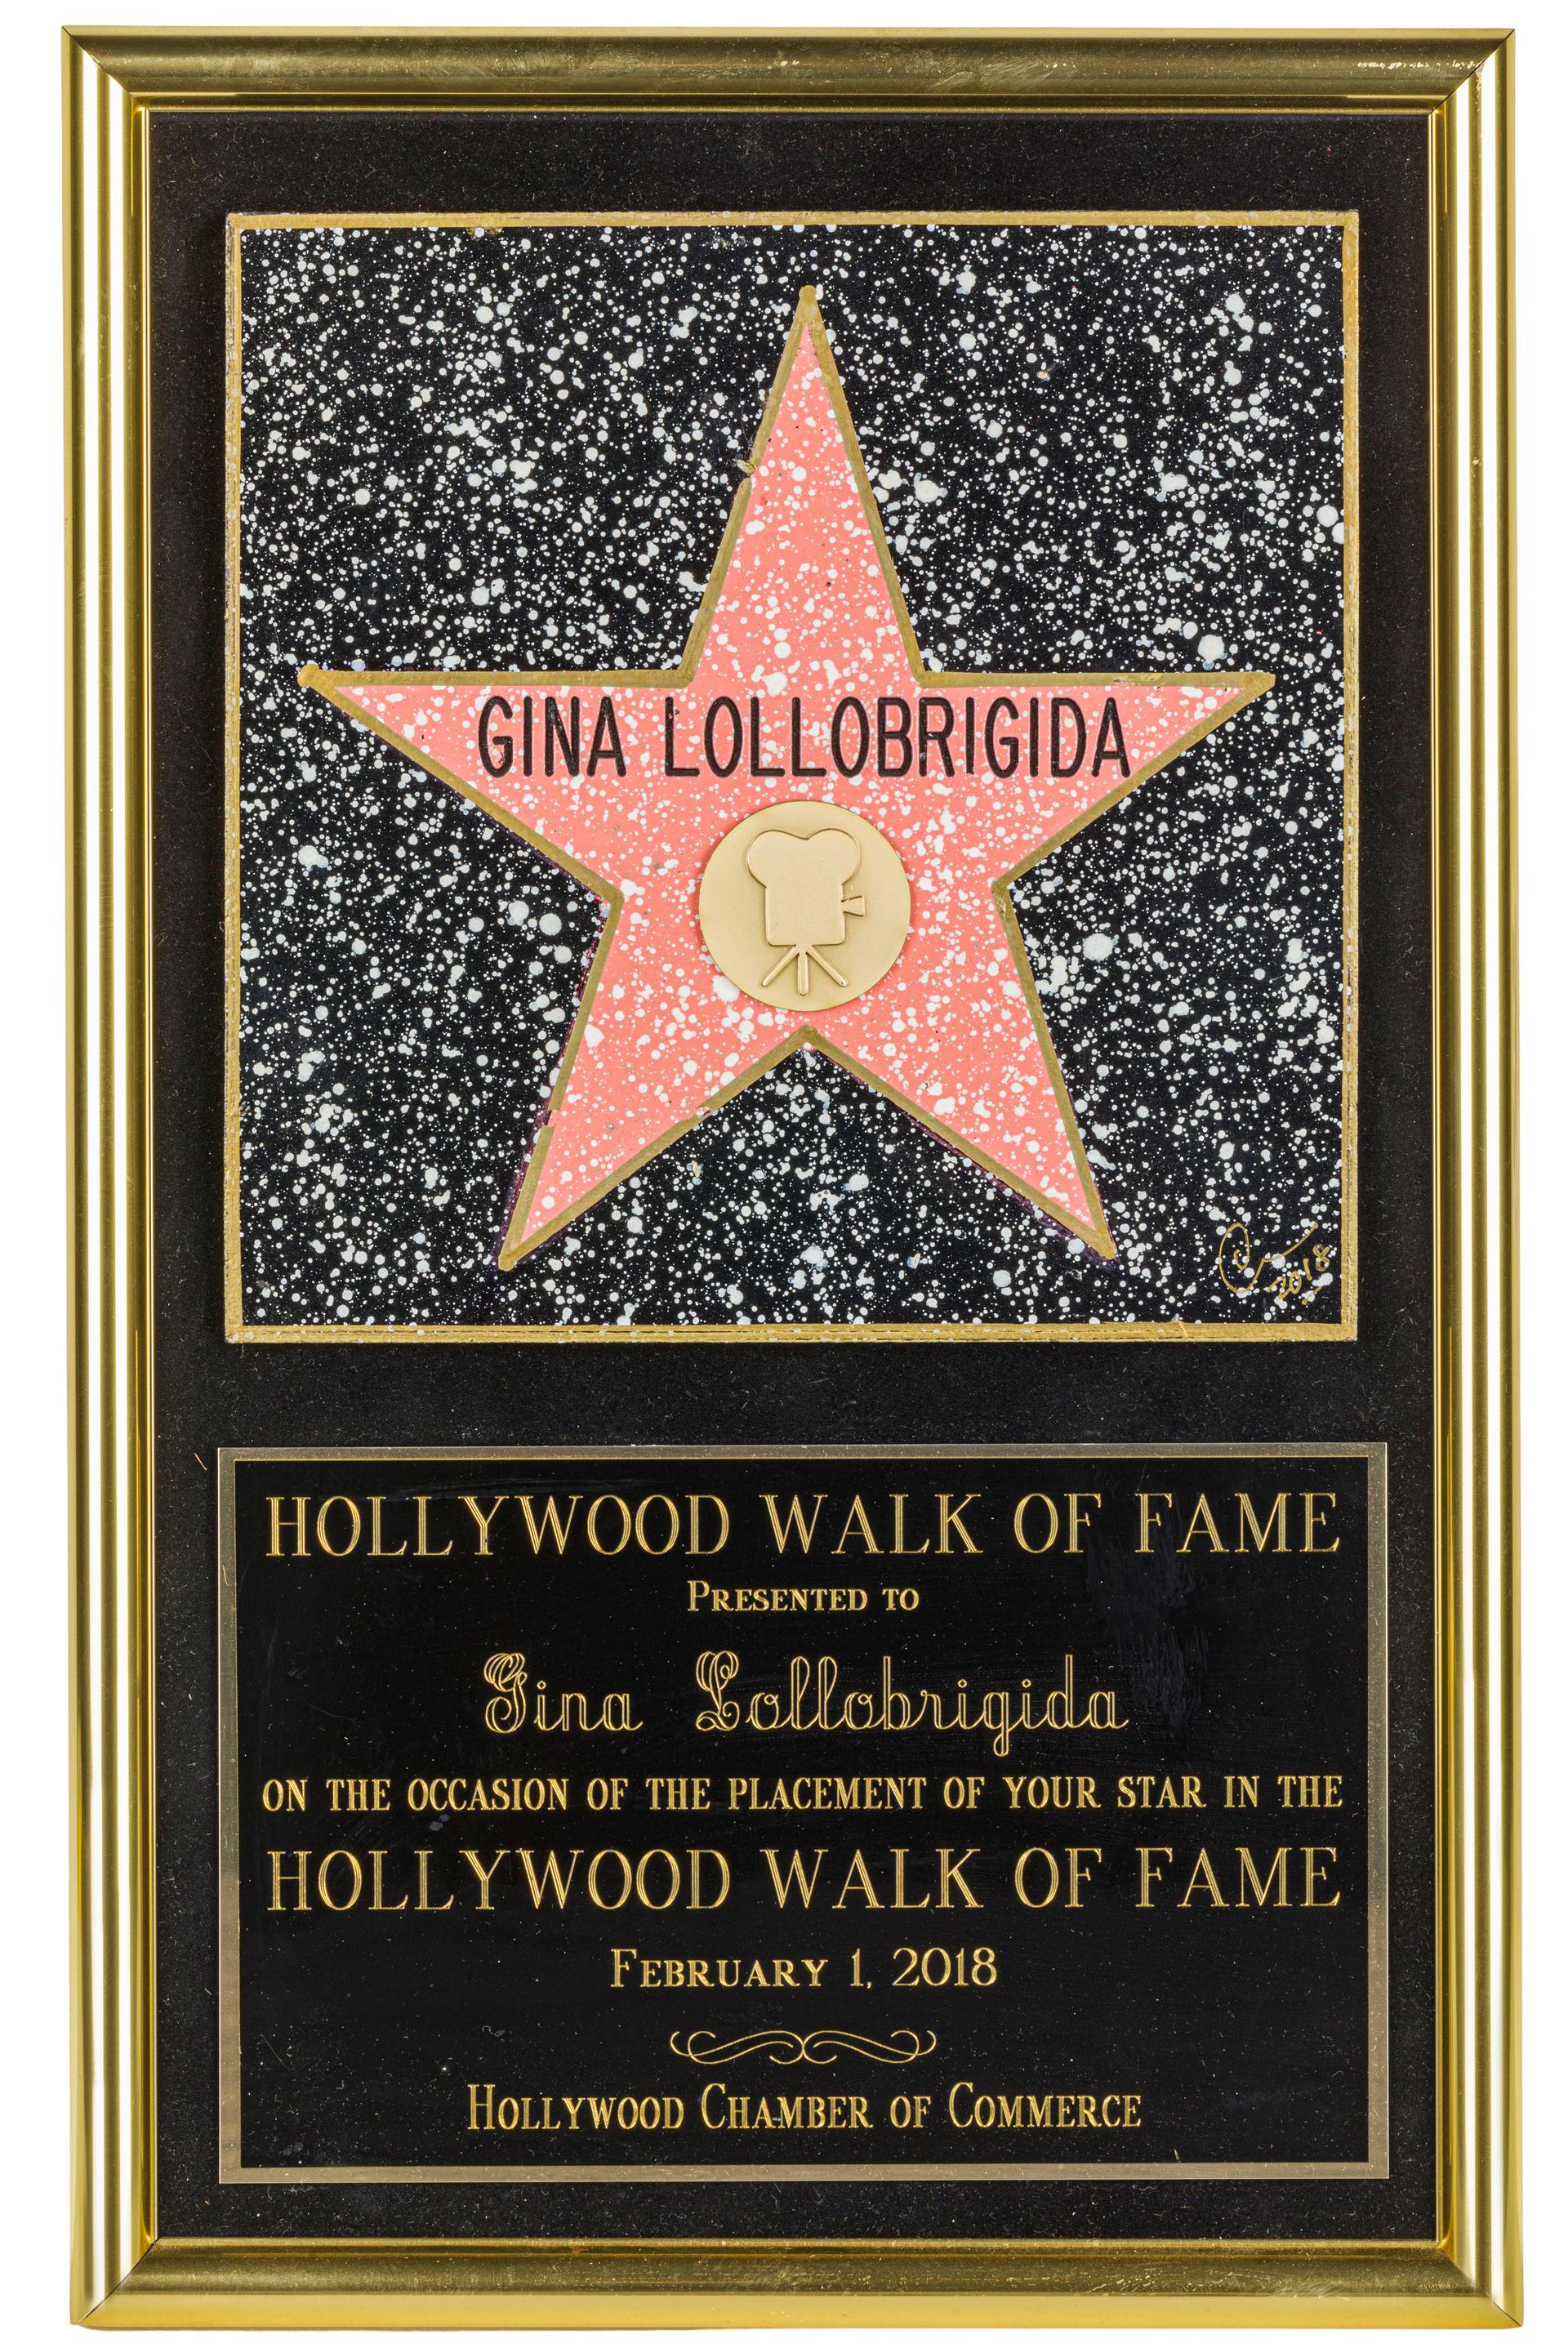 HOLLYWOOD WALK OF FAME, 1 FEBBRAIO 2018, placca commemorativa dedicata a Gina Lollobrigida